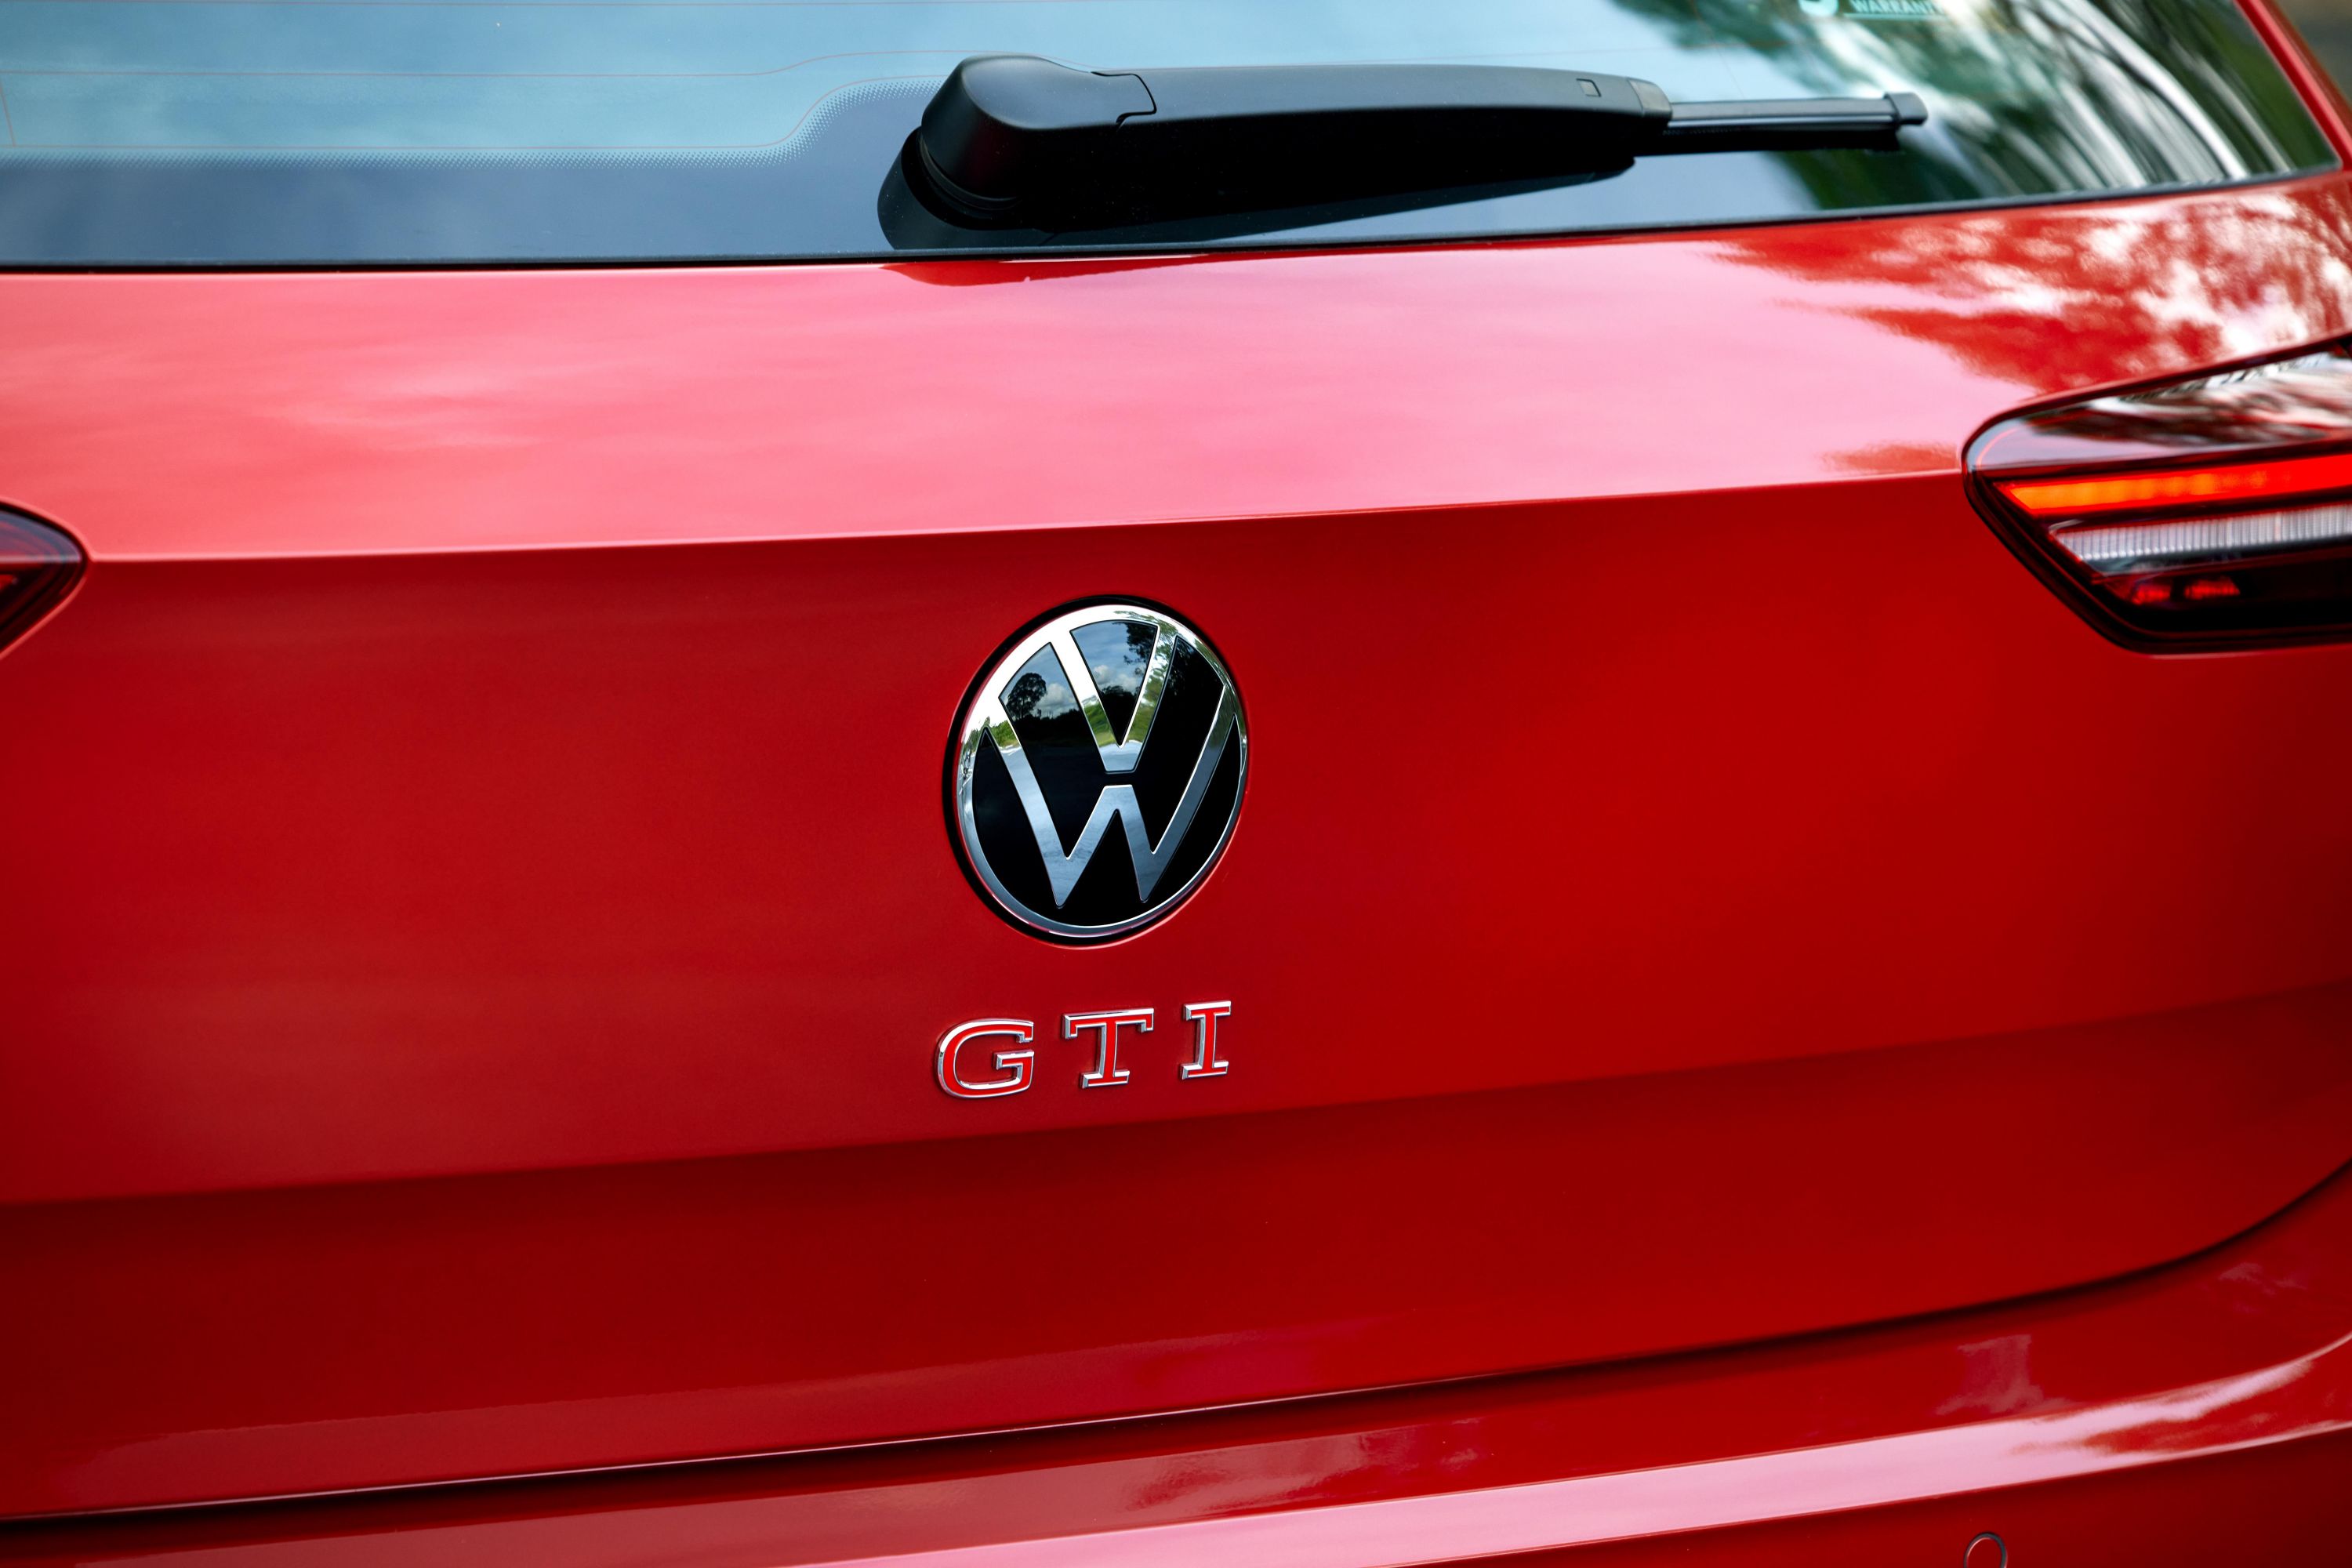 Volkswagen Polo GTI (2022) - pictures, information & specs